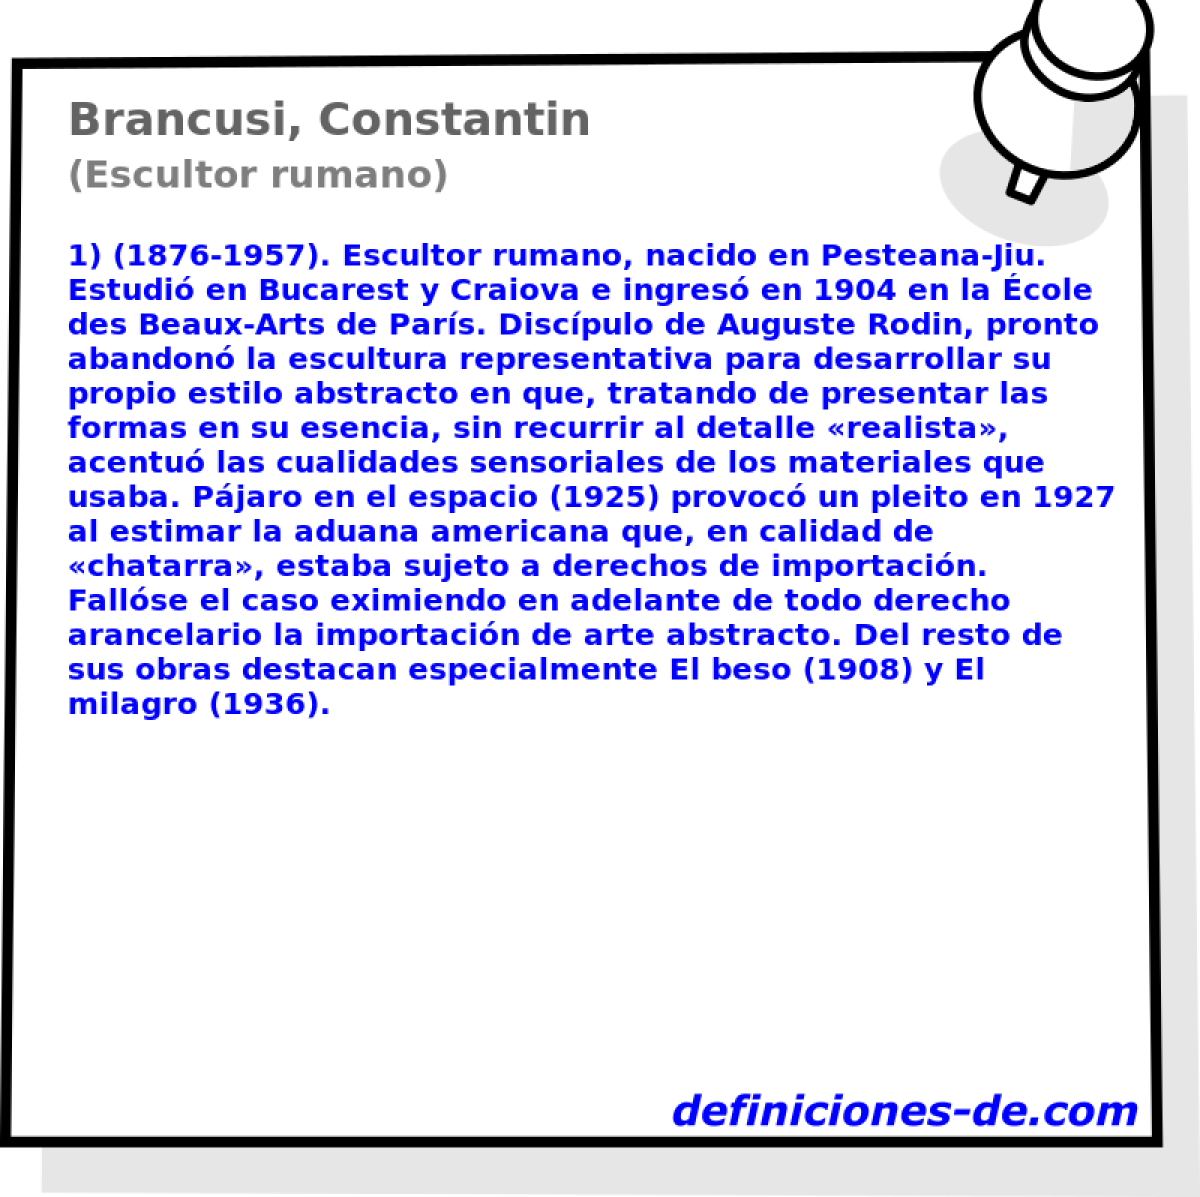 Brancusi, Constantin (Escultor rumano)